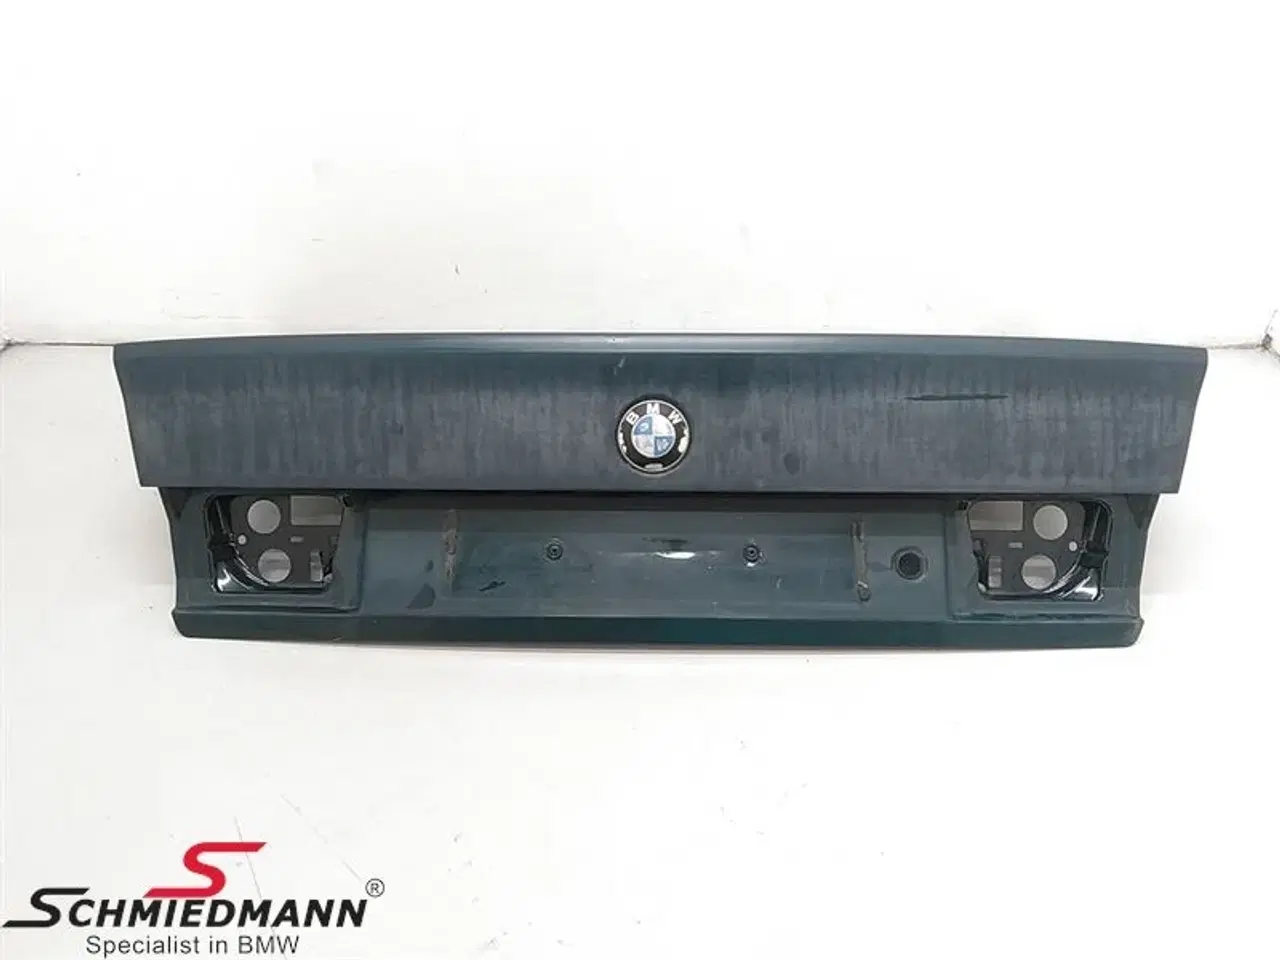 Billede 1 - Bagklap sedan - Fin ingen rust. C52703 BMW E34